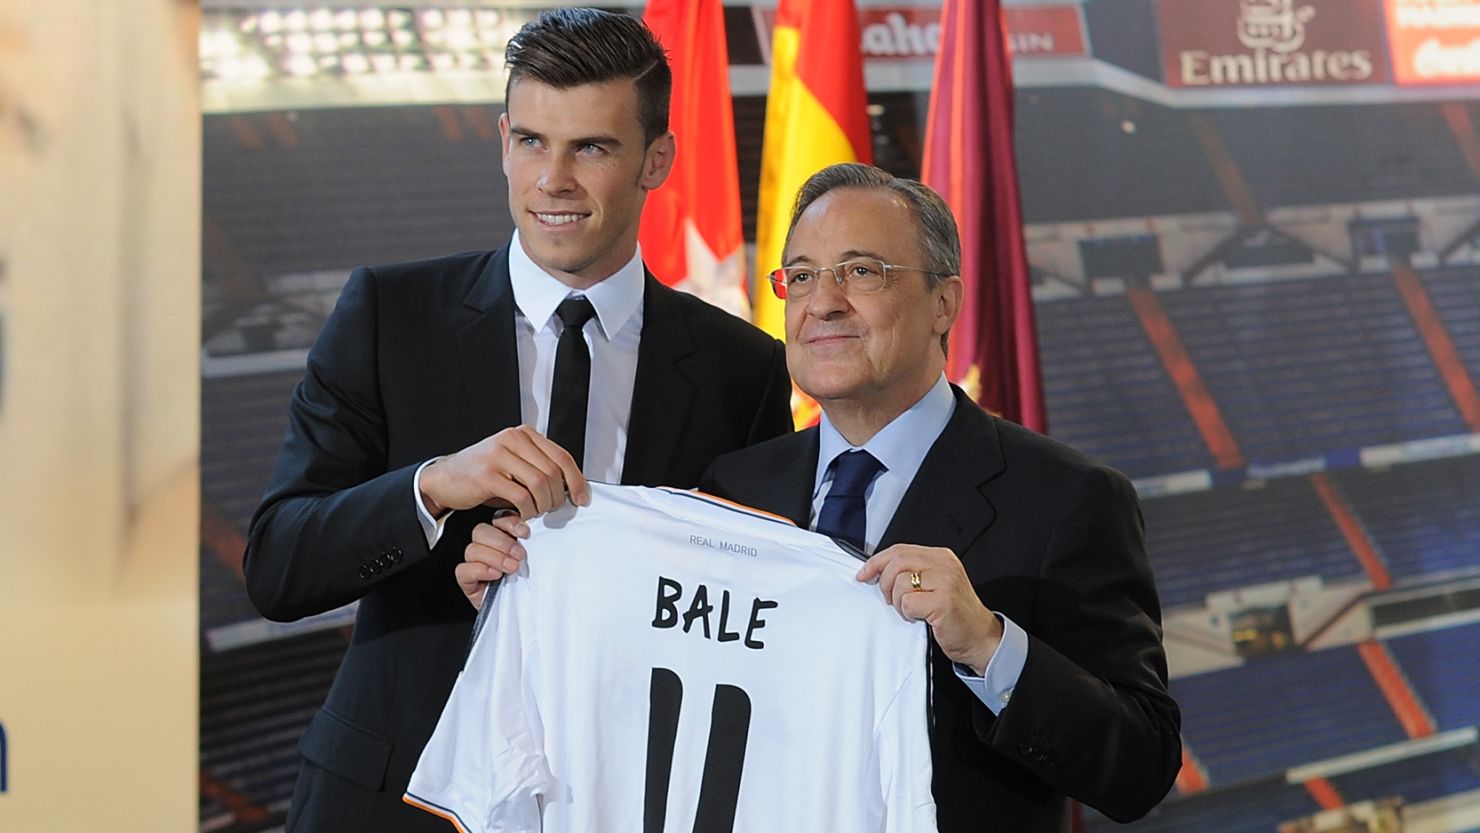 Gareth Bale and Real Madrid President Florentino Perez pose for photographers at the Bernabeu Stadium on Monday.